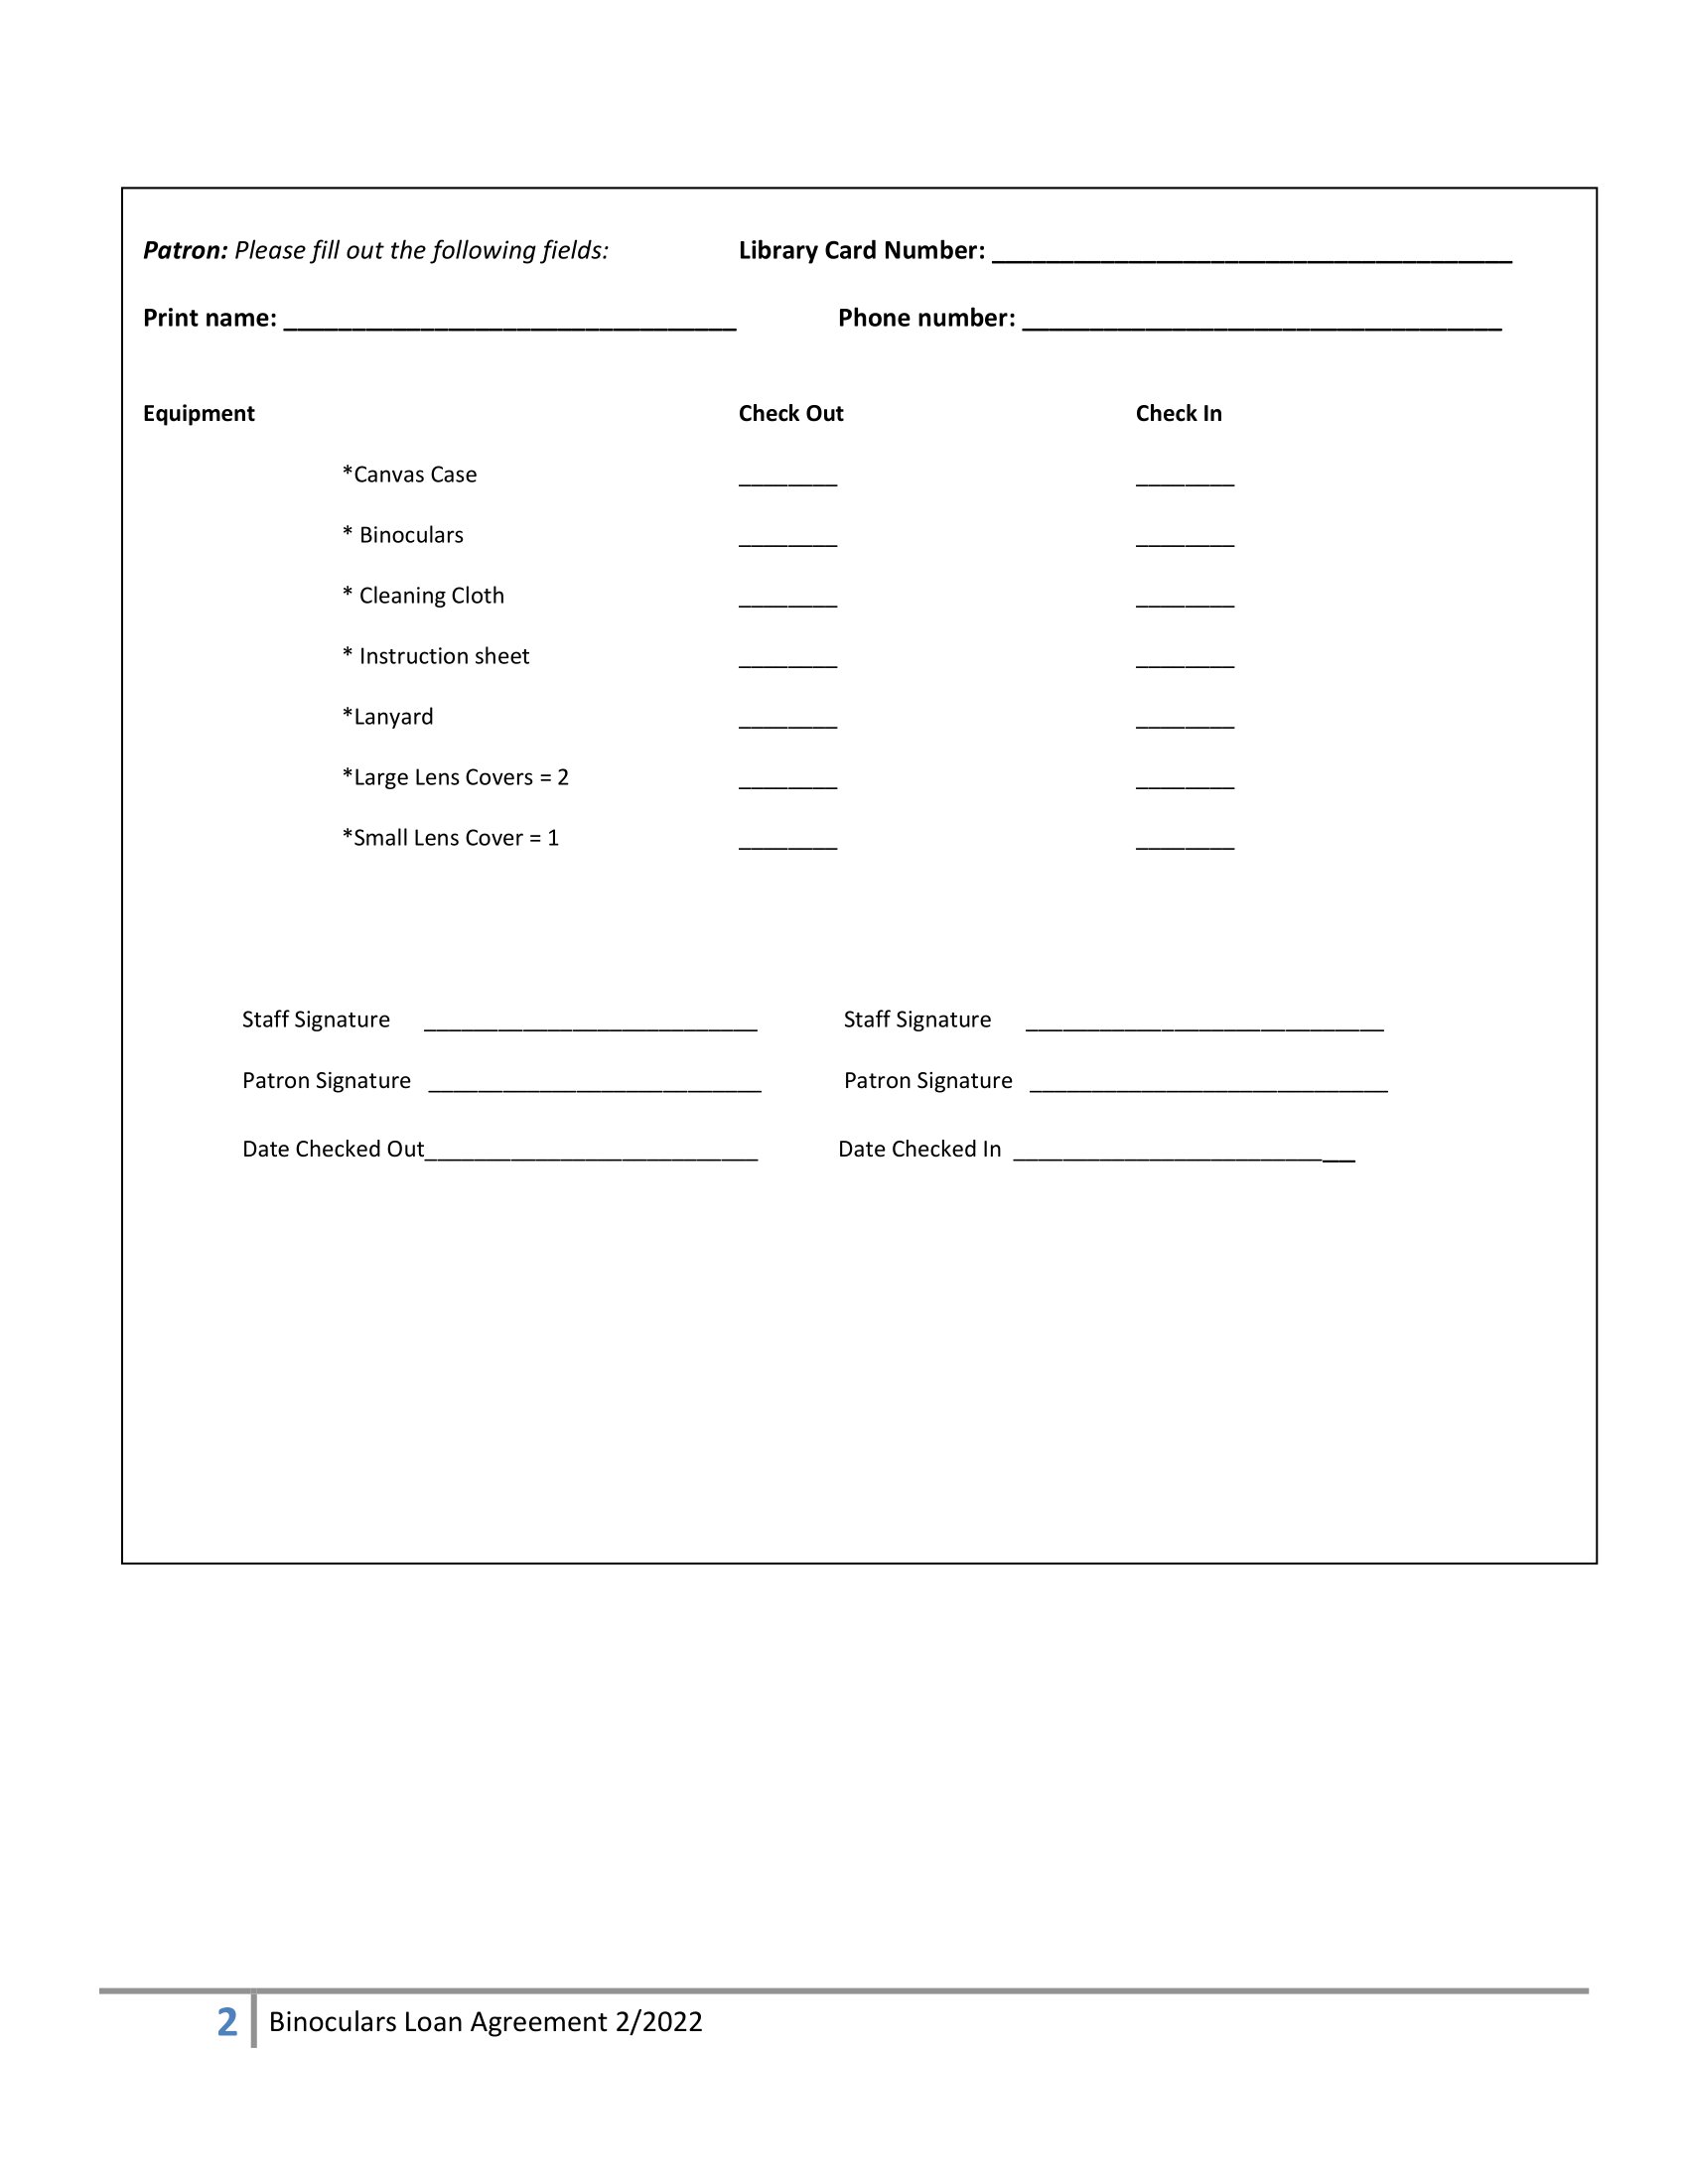 Binocular Loan Agreement page 2